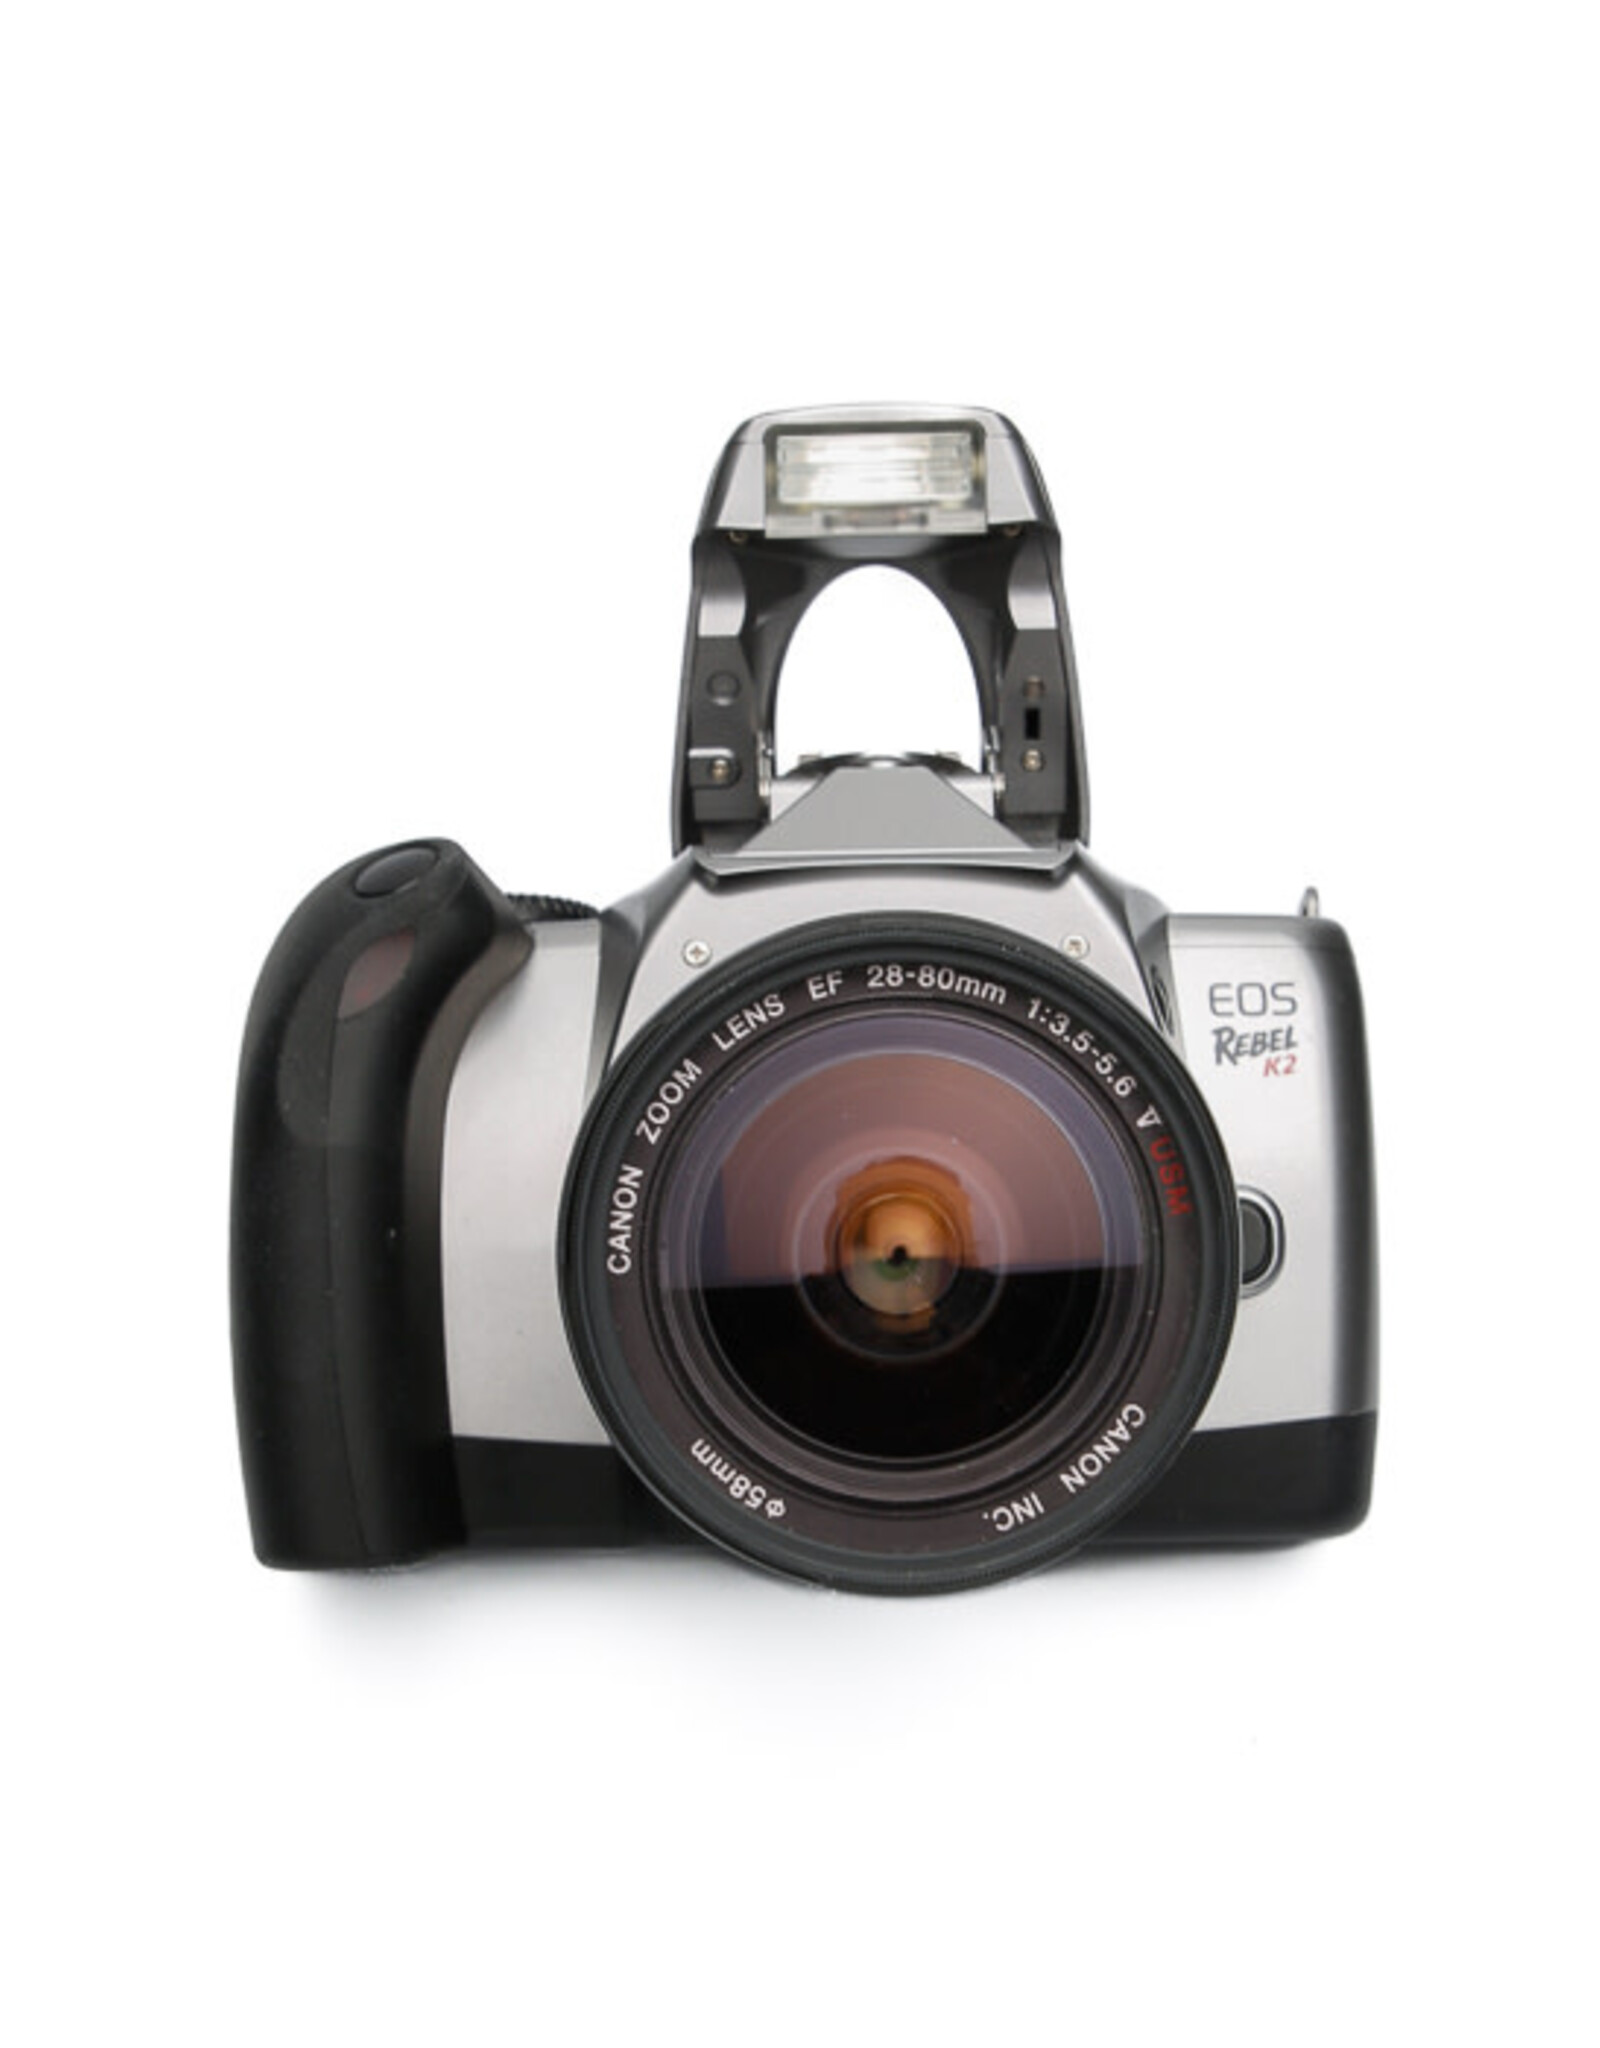 Canon Canon Rebel K2 Film SLR Camera w/28-80 f3.5-5.6 USM Lens